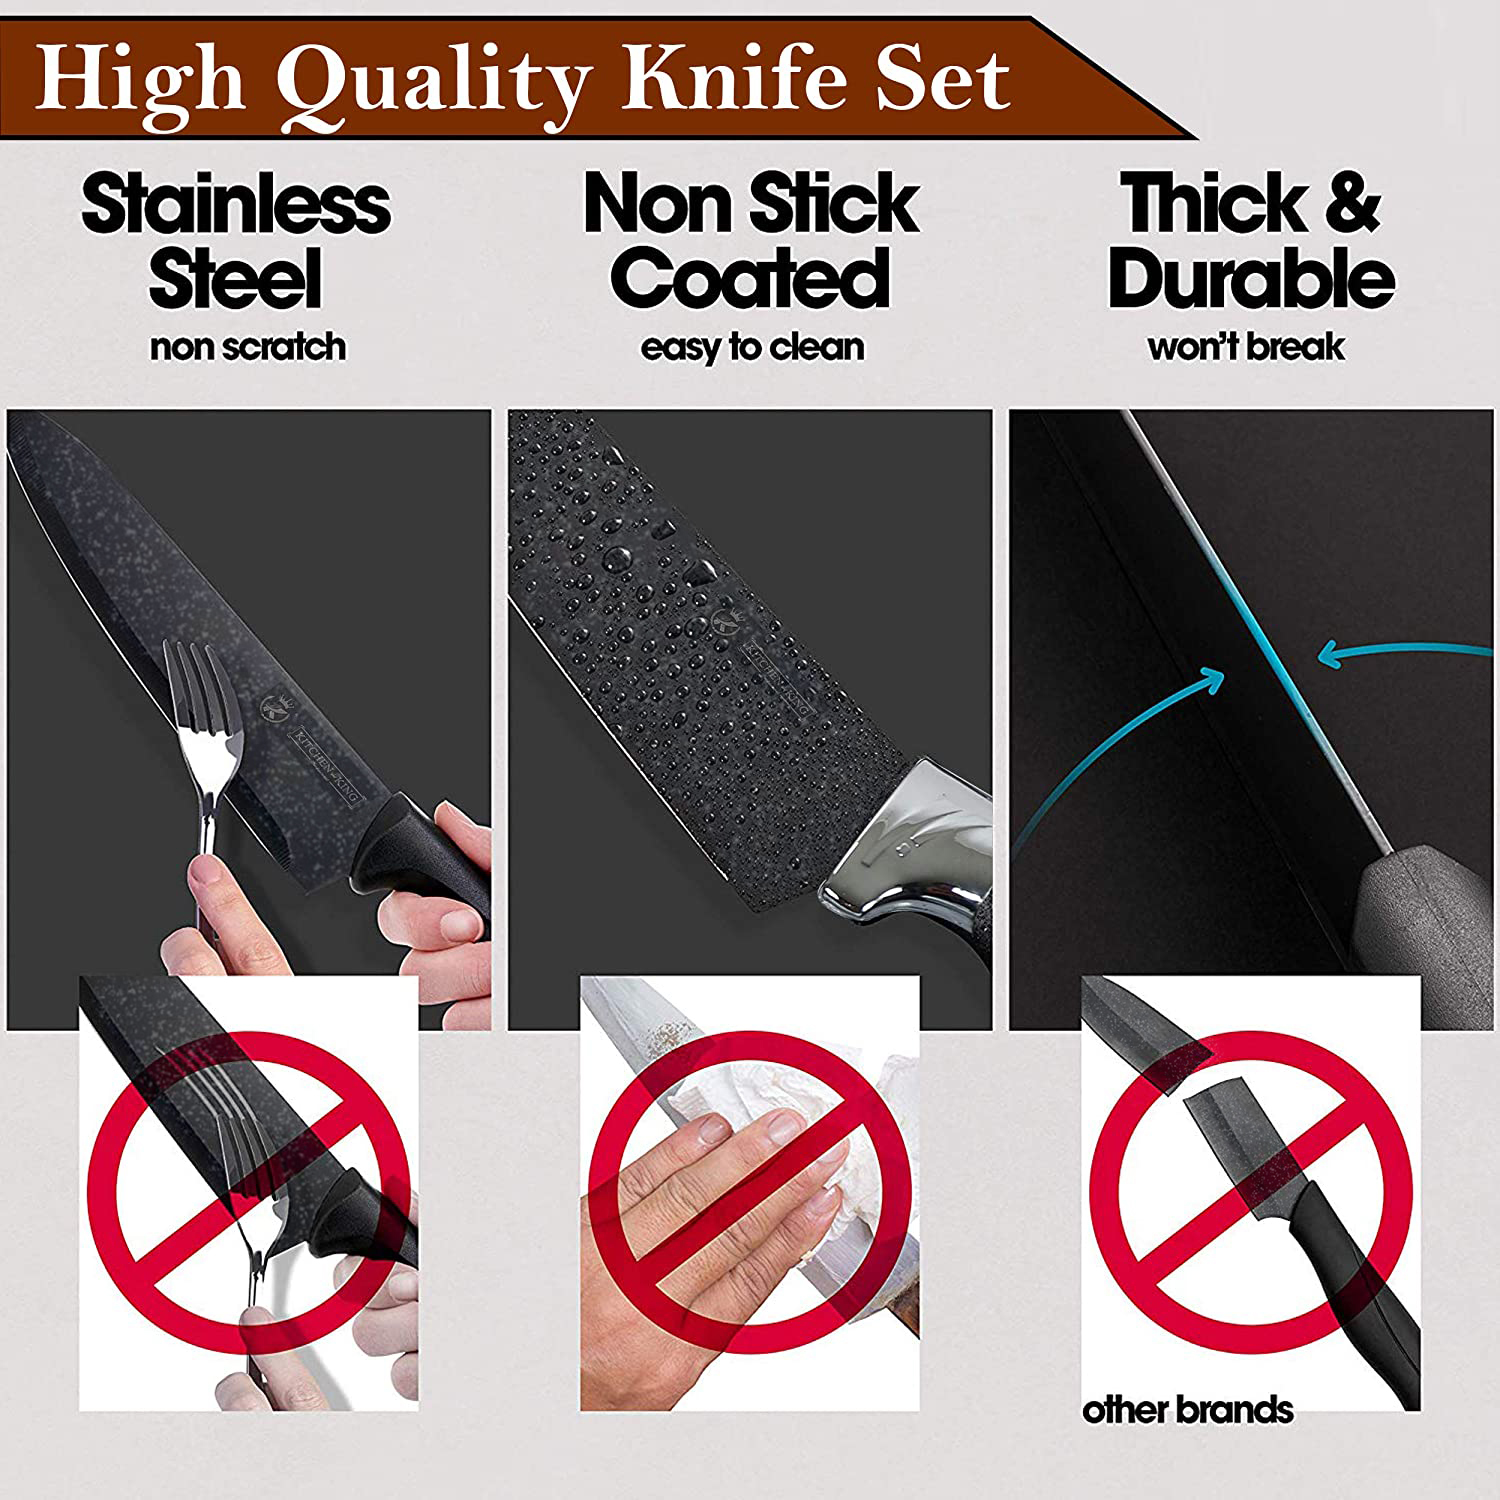 Buy Kitchen King 6 Pcs Knife Set Online From Blcost